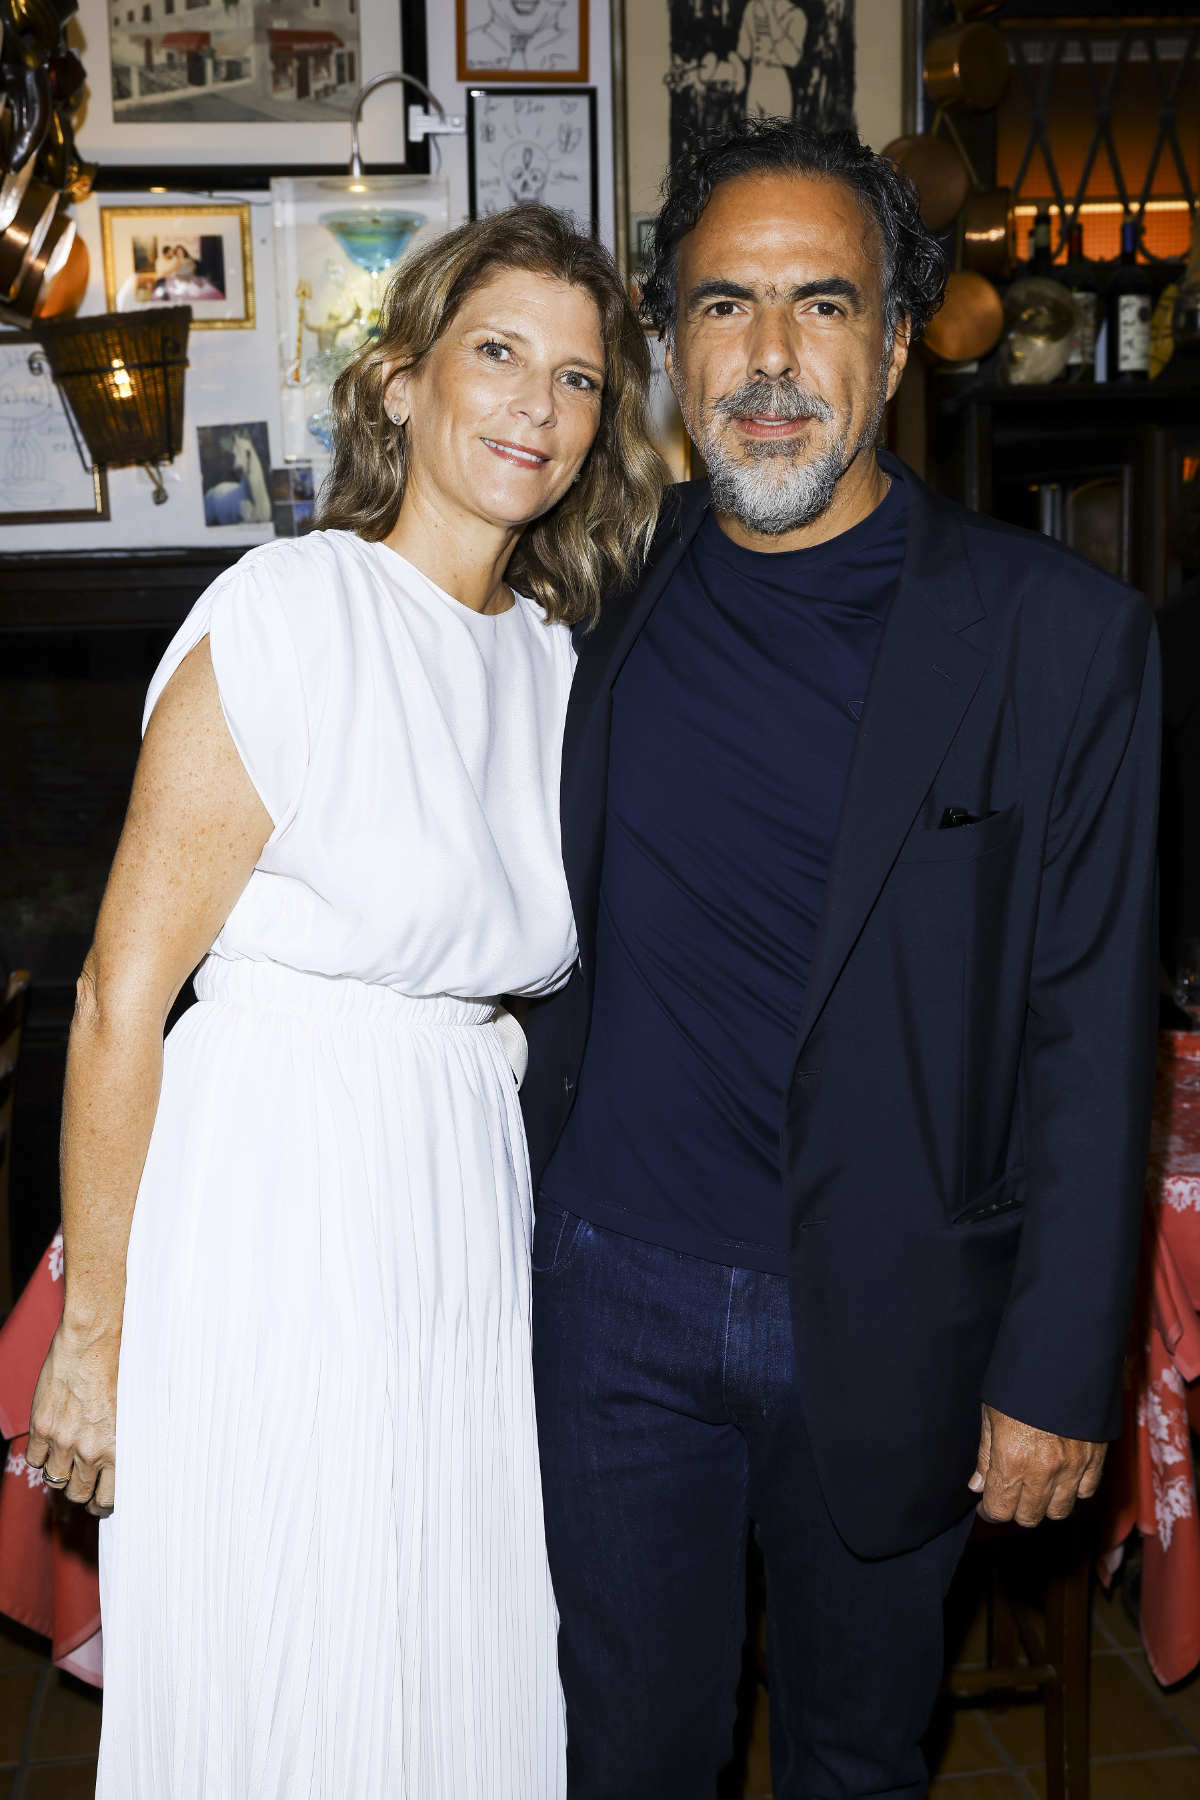 Miuccia Prada Hosted A Dinner For Academy Award Film Director Alejandro González Iñárritu